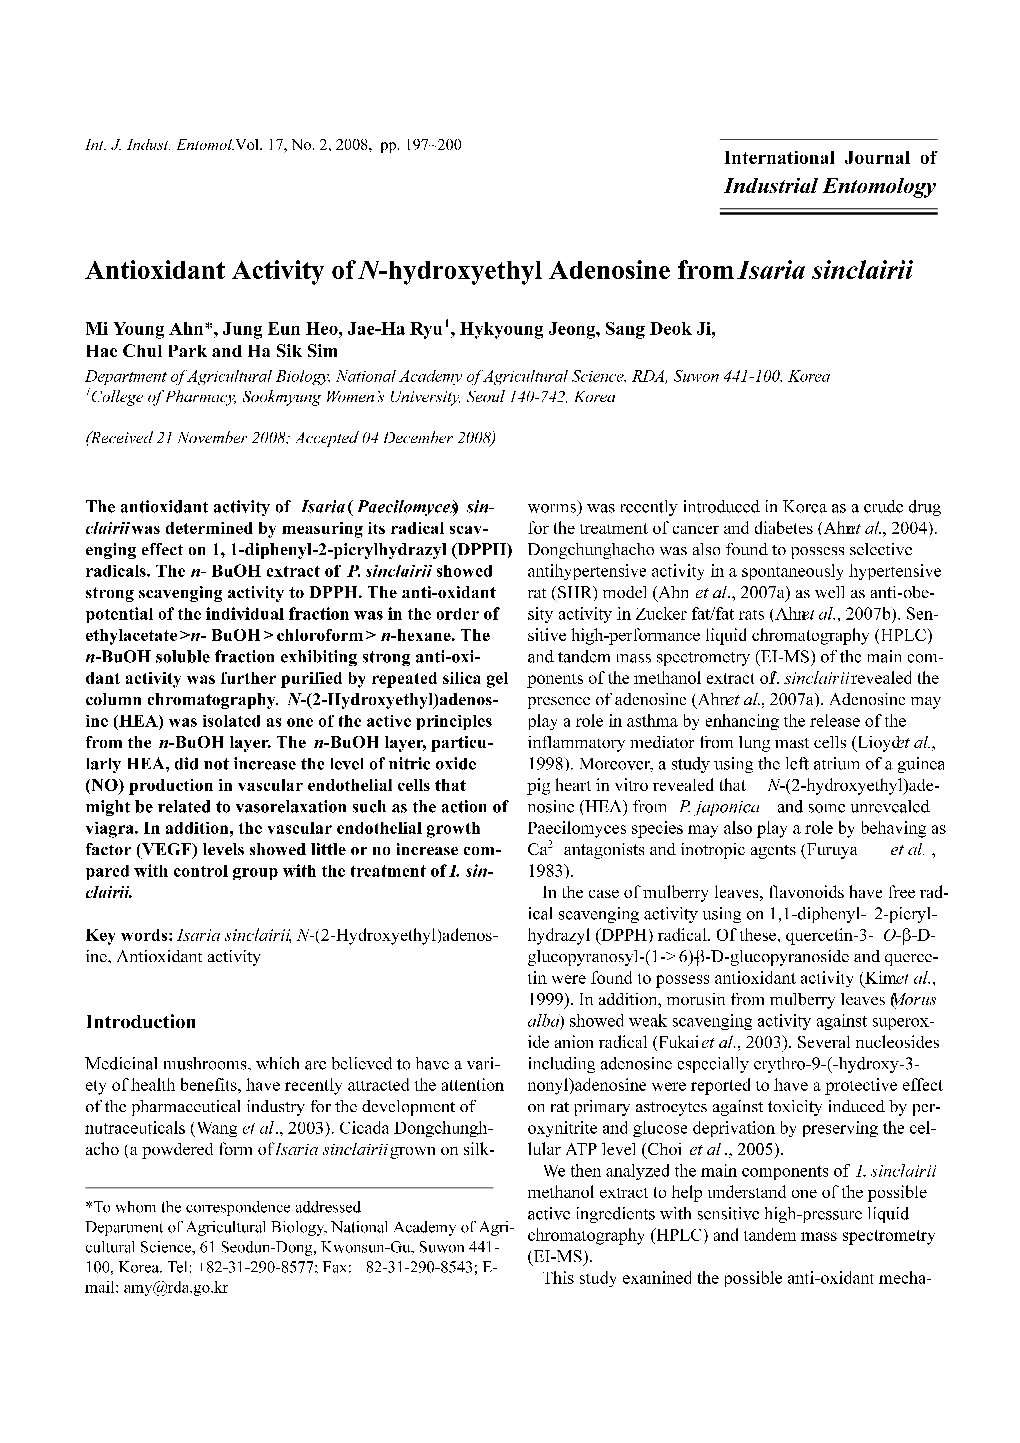 Antioxidant Activity of N-Hydroxyethyl Adenosine from Isaria Sinclairii